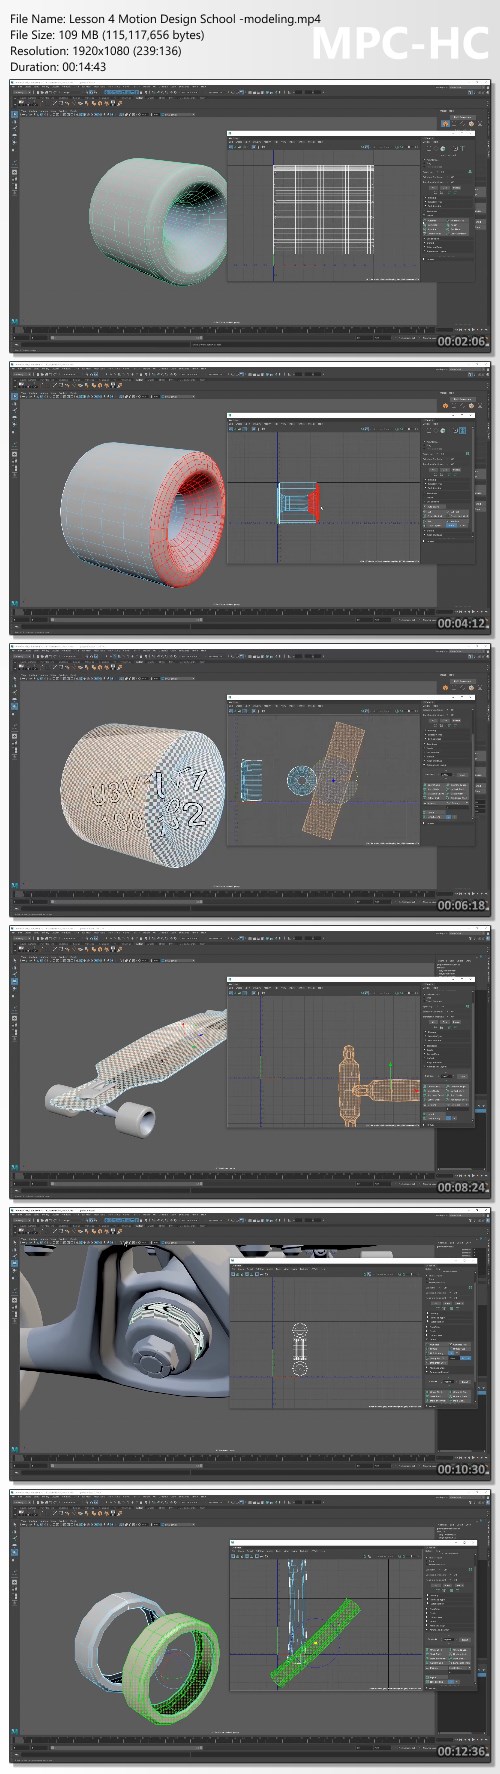 Motion Design School - Modeling Essentials in Autodesk Maya by Ihor